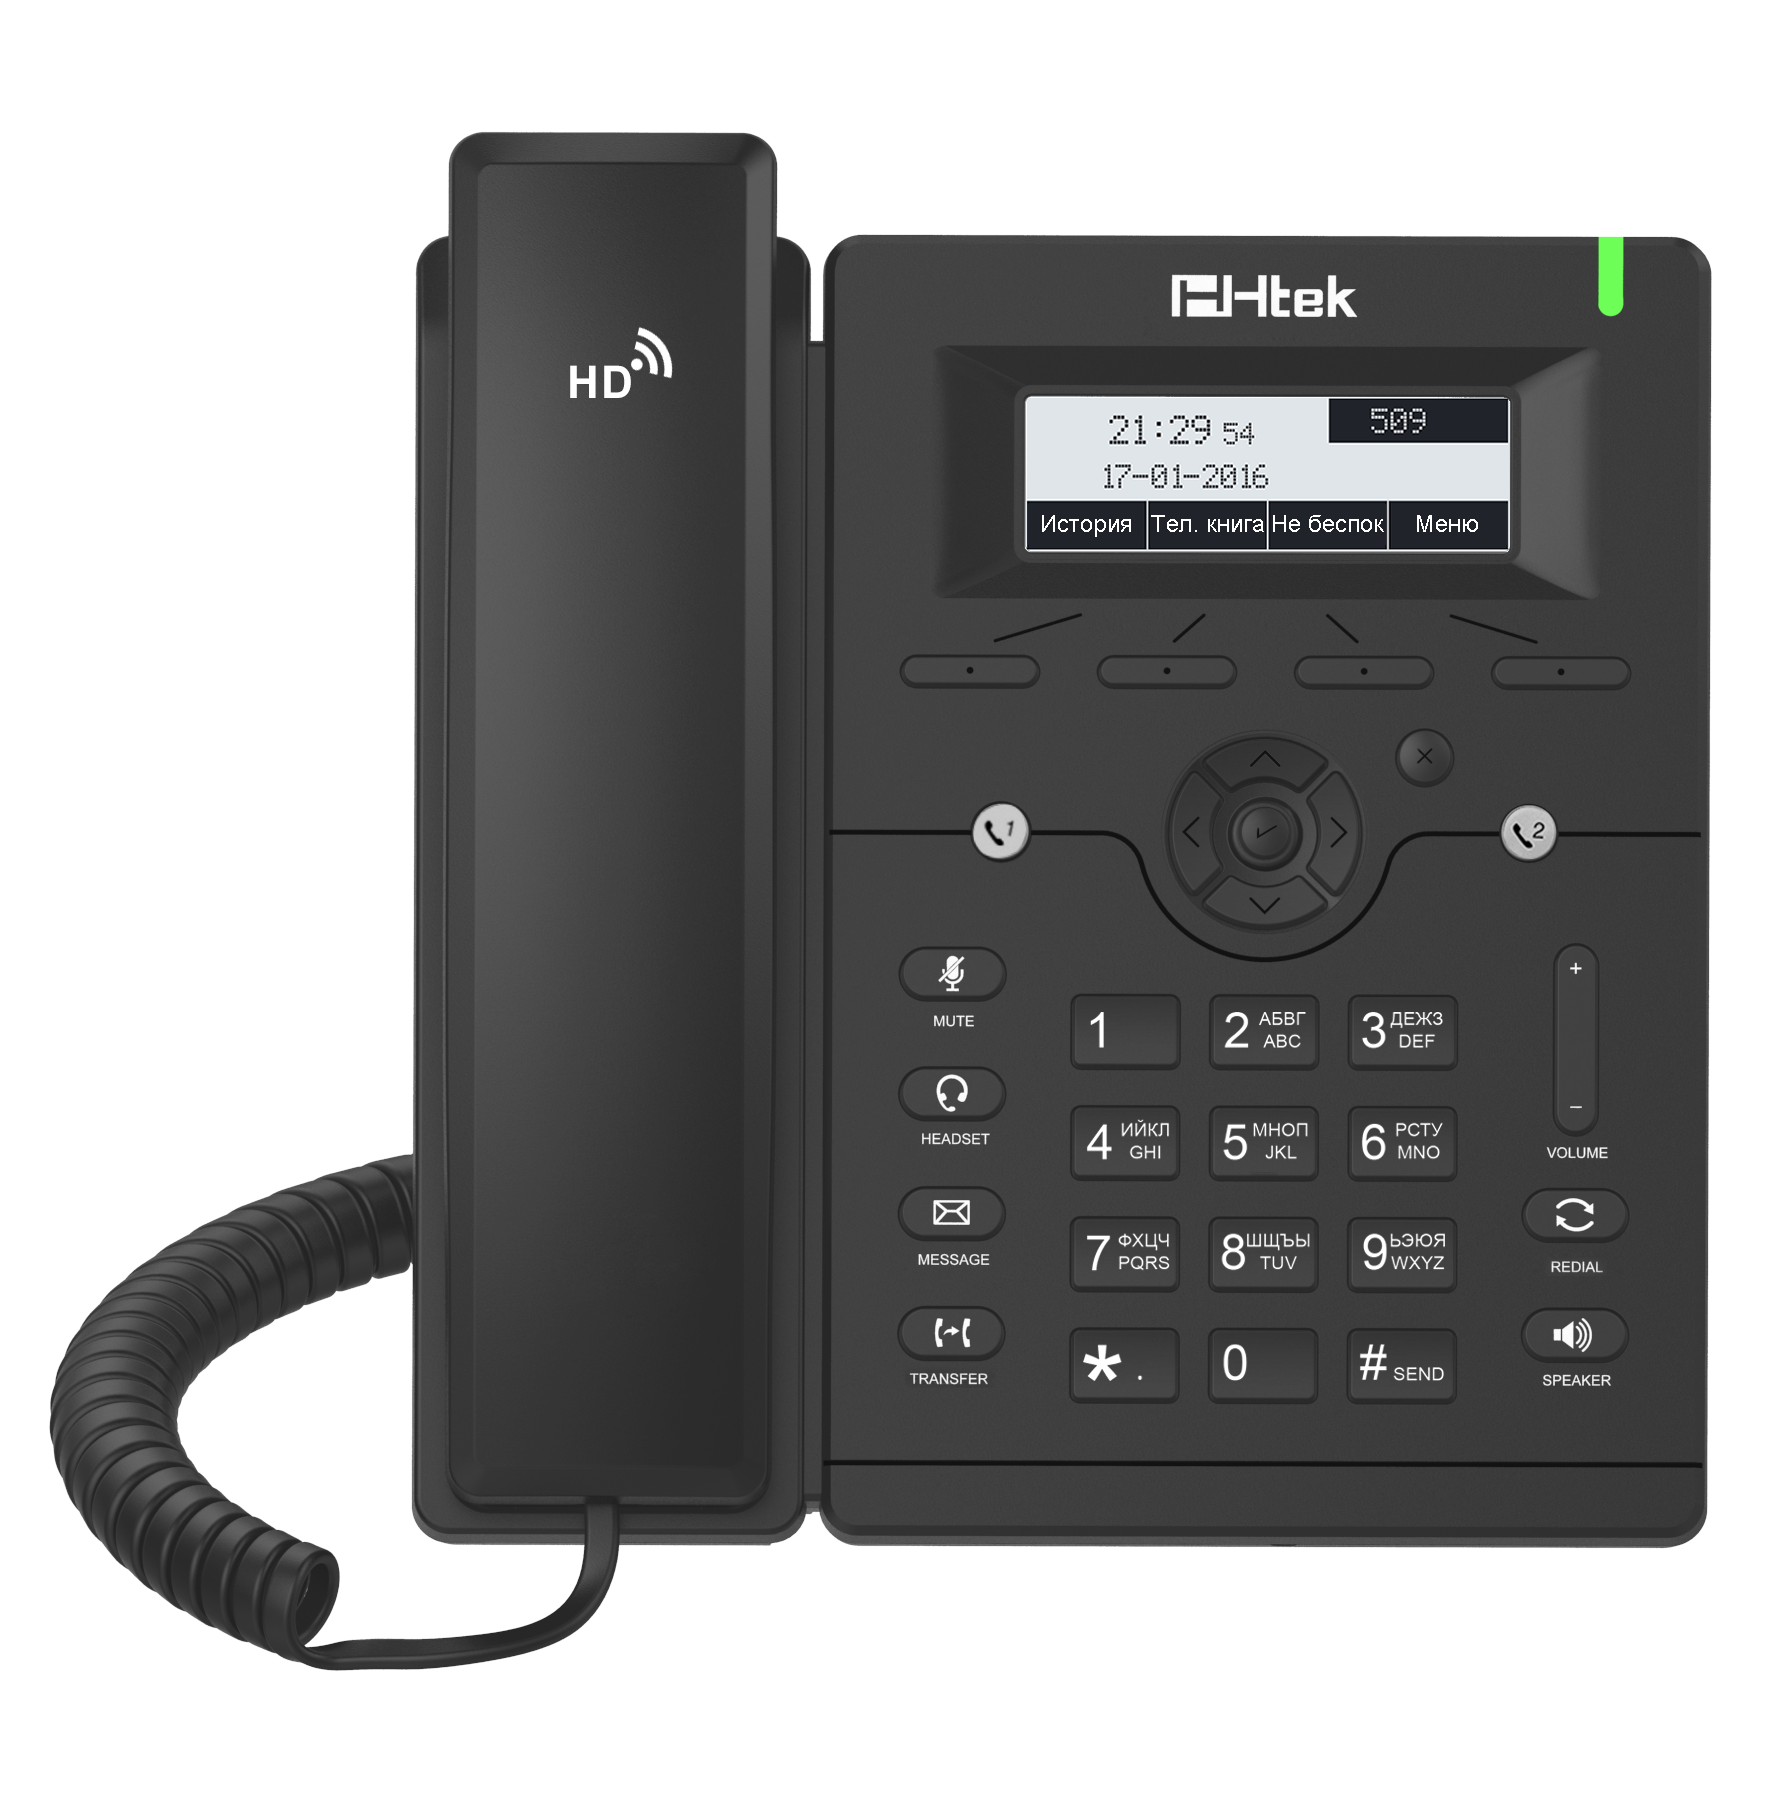 UC902P RU корпоративный IP-телефон начального уровня